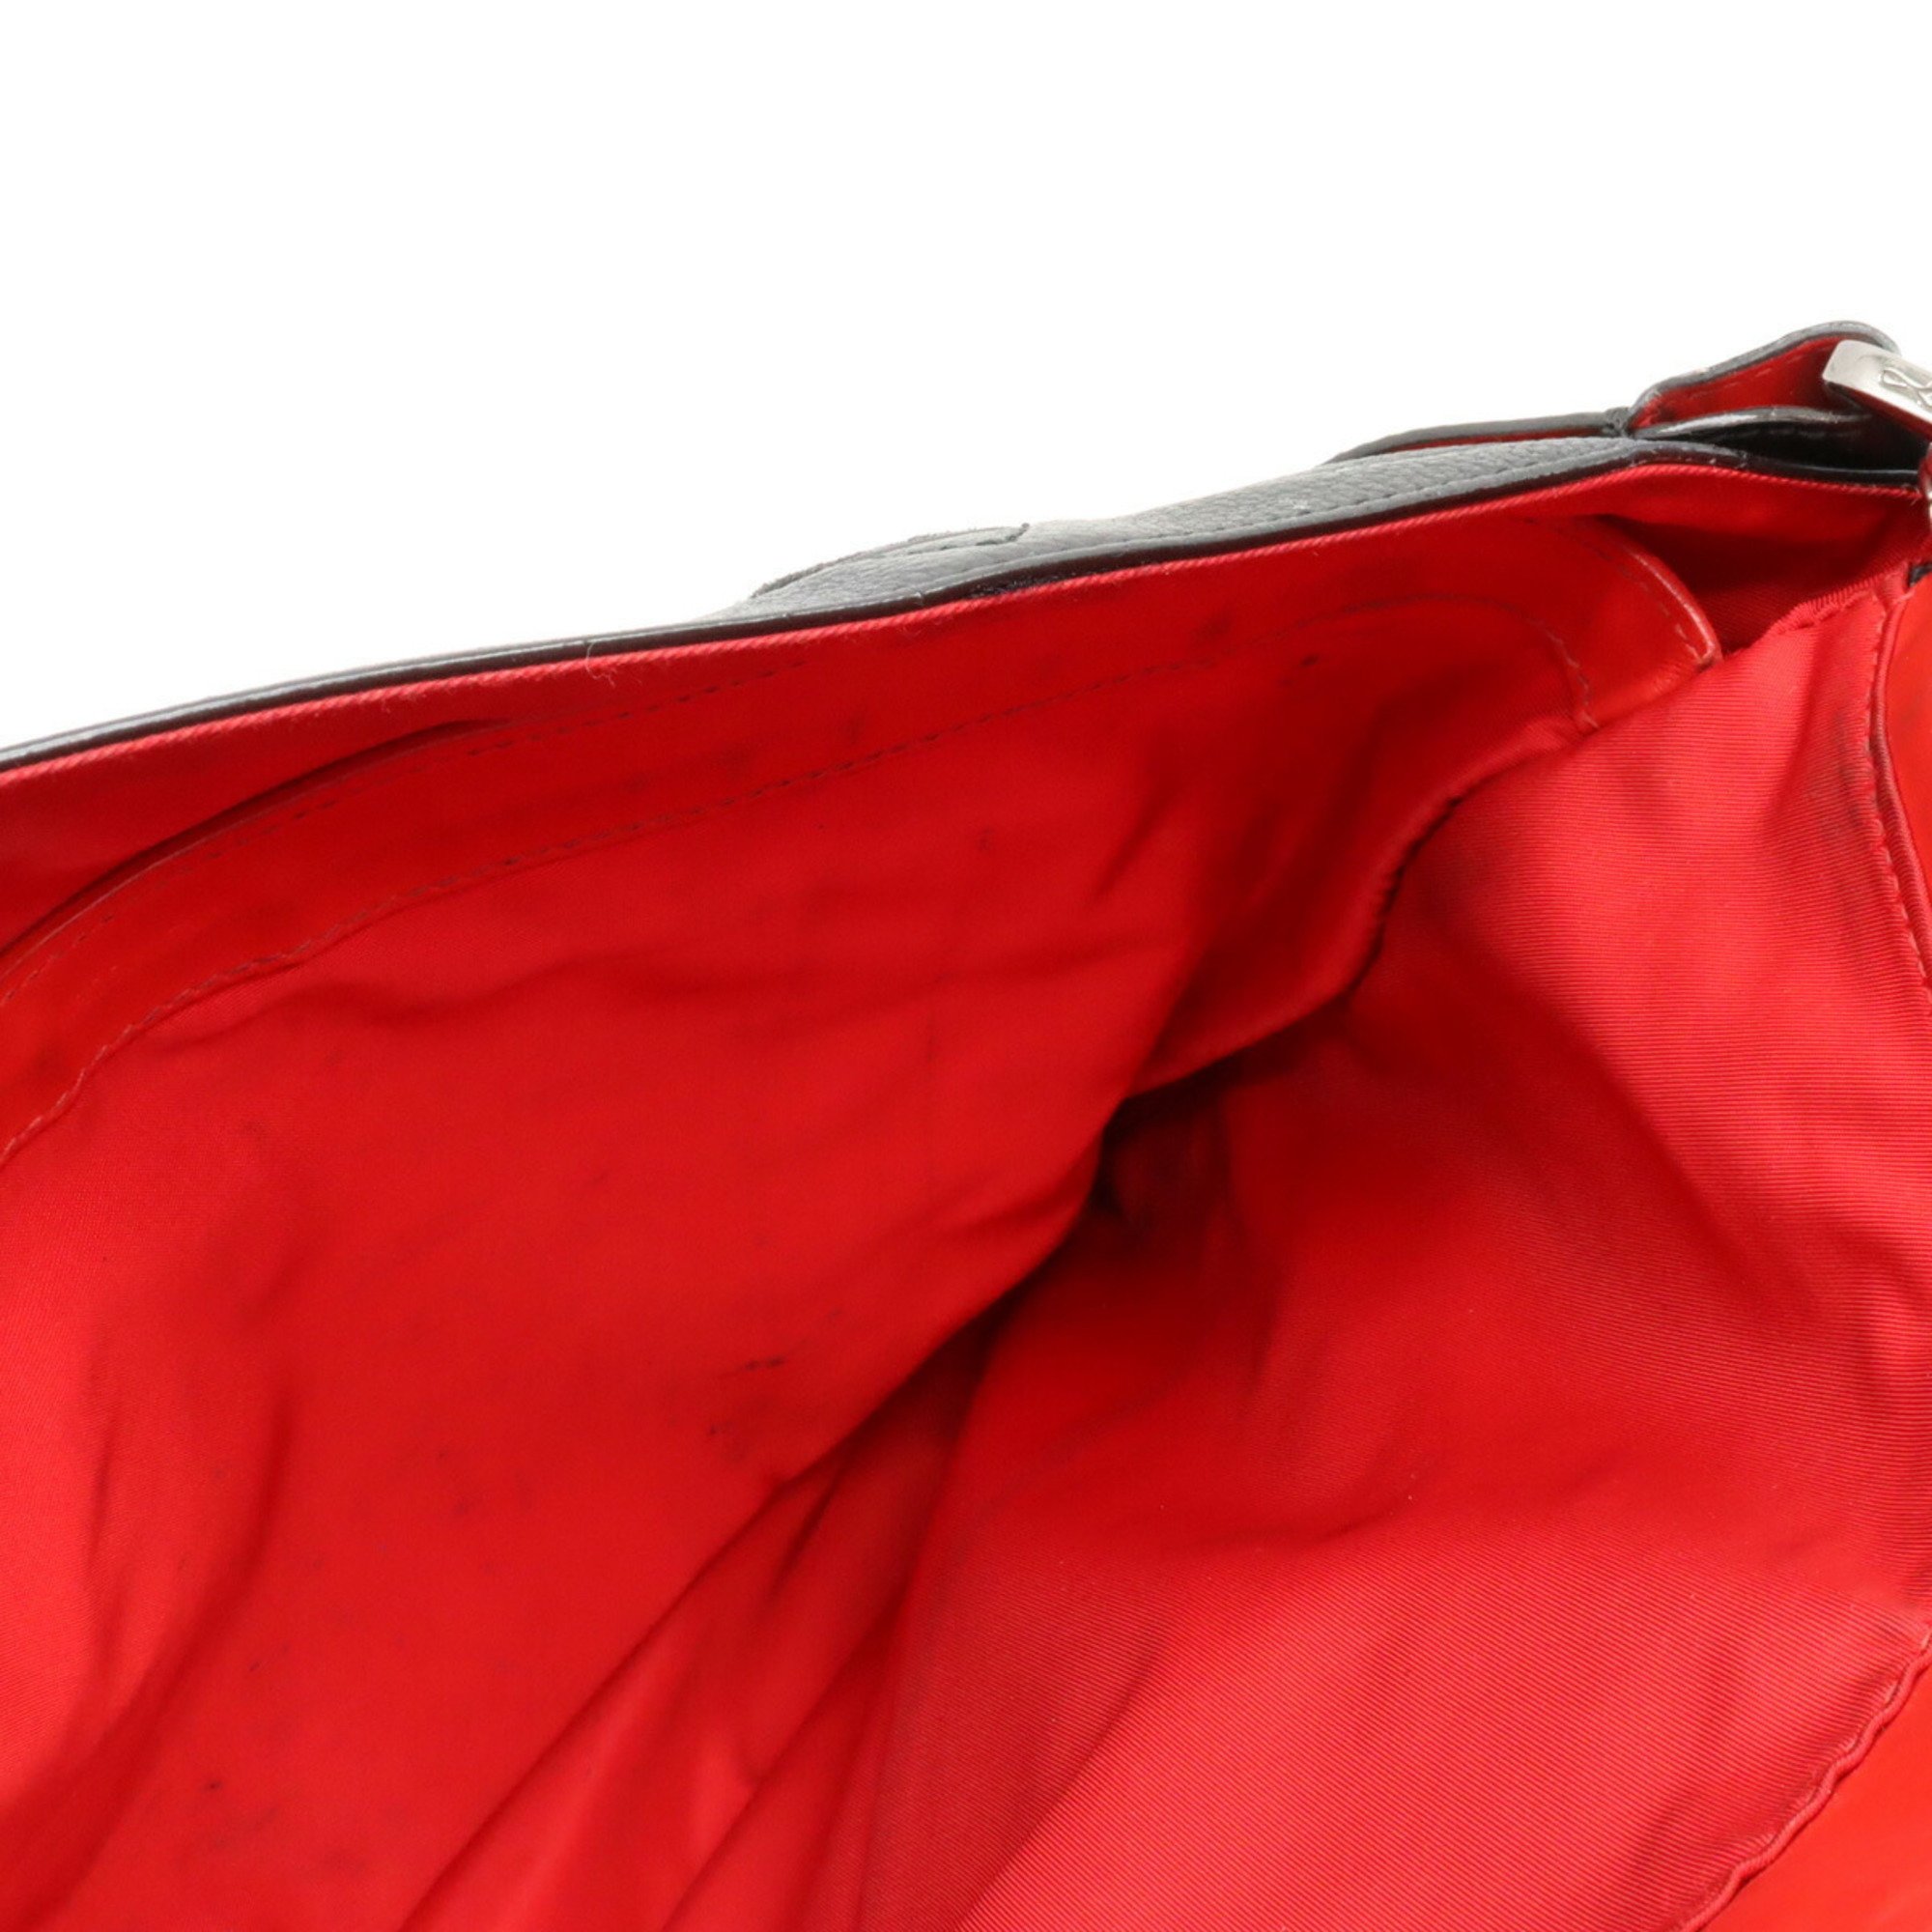 Christian Louboutin Studded Rubiclic Shoulder Bag Leather Black Red